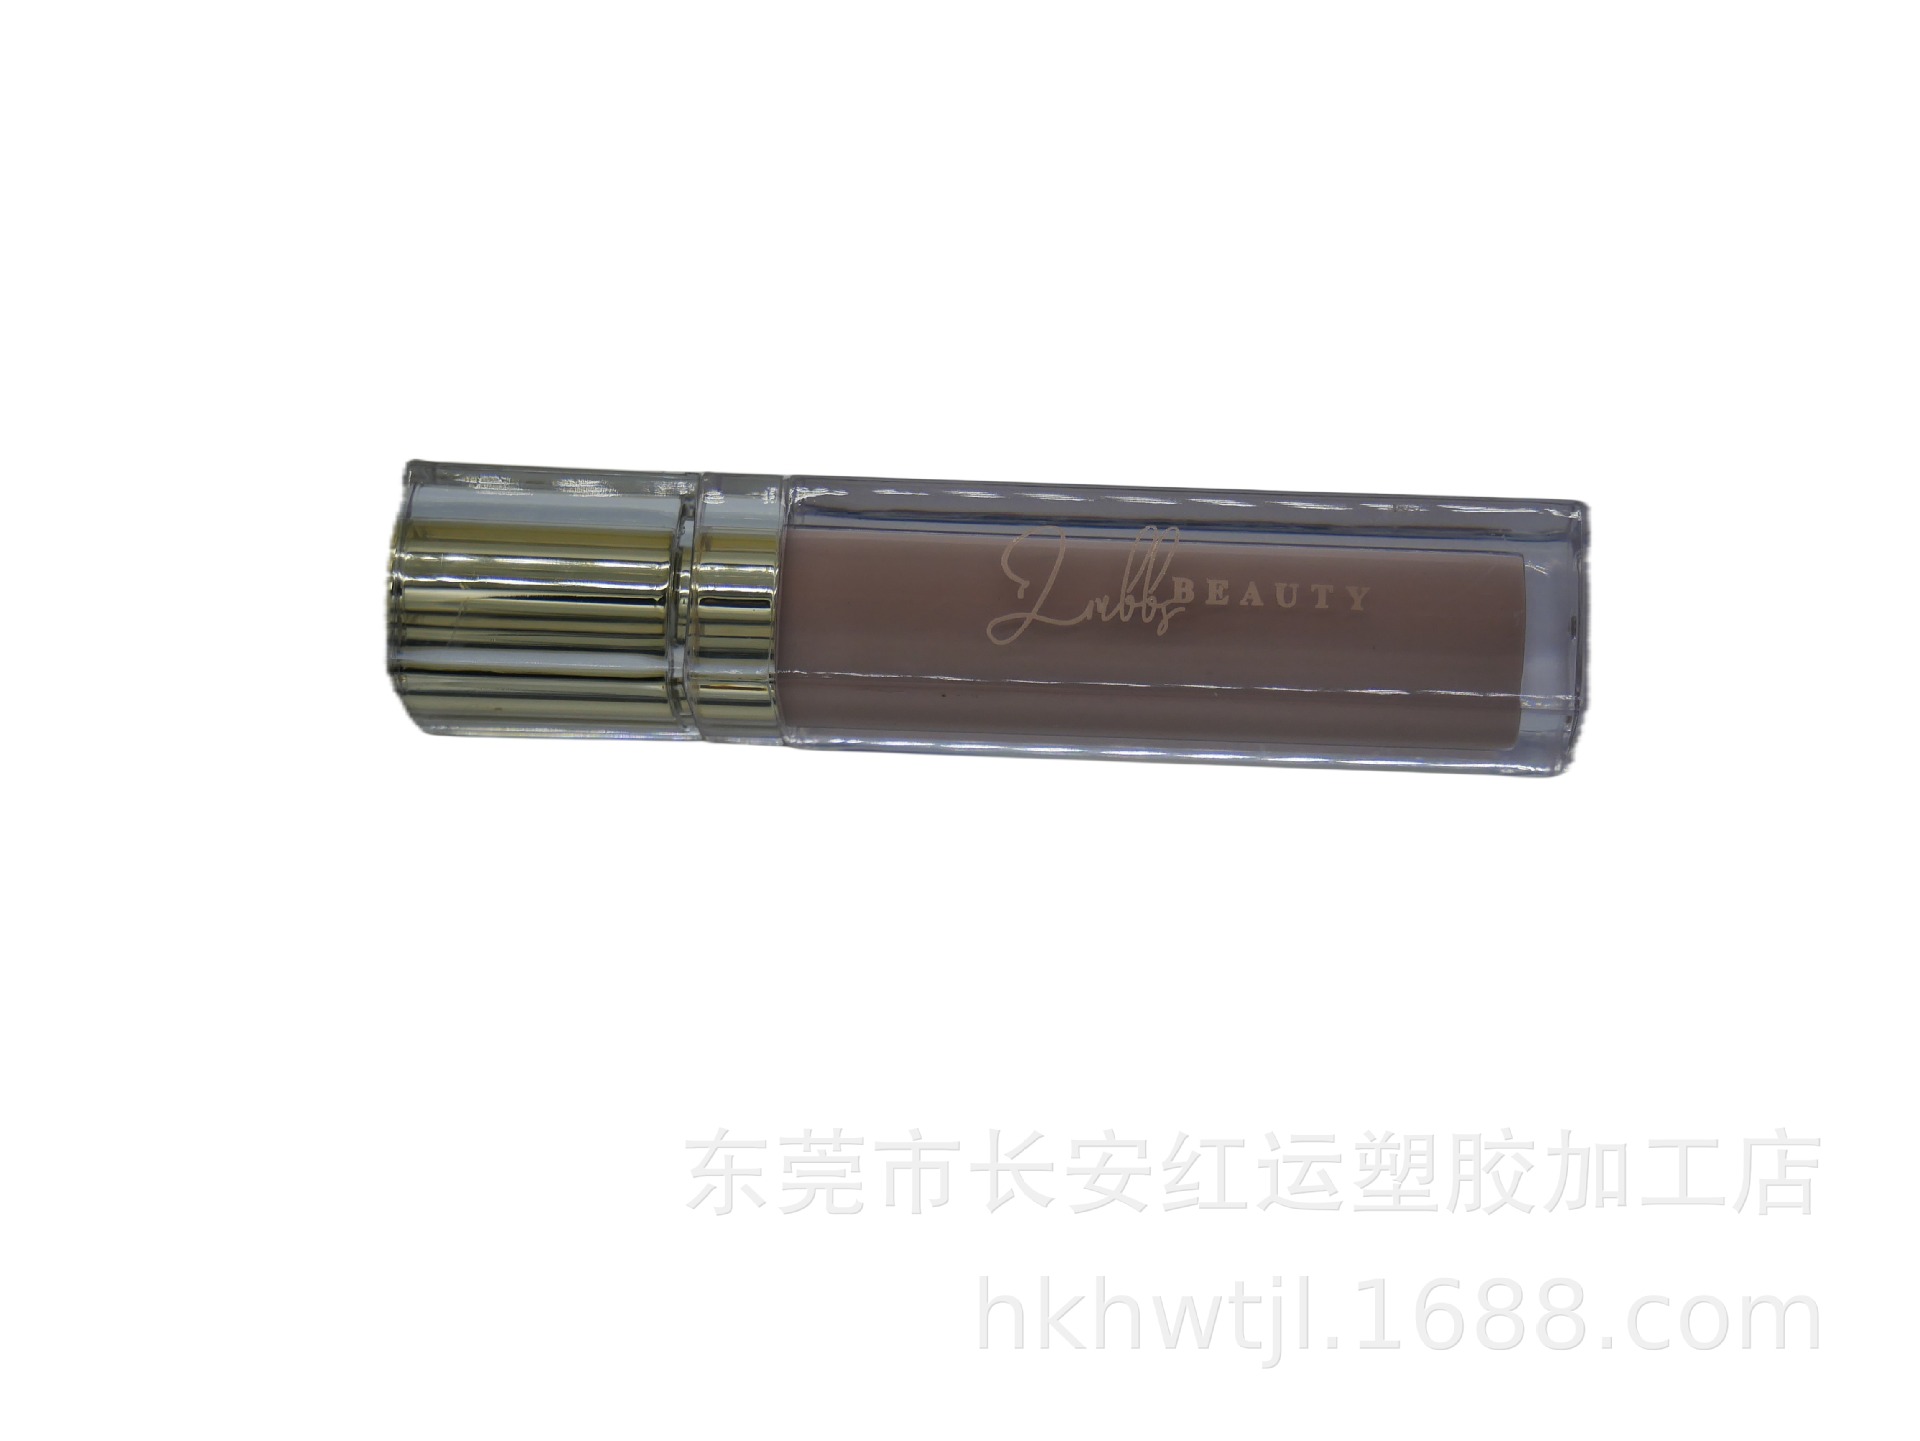 Dongguan Chang'an Gilding Labial glaze Surface Gilding Lipstick Lipstick Shell Hot silver Packaging box stamping